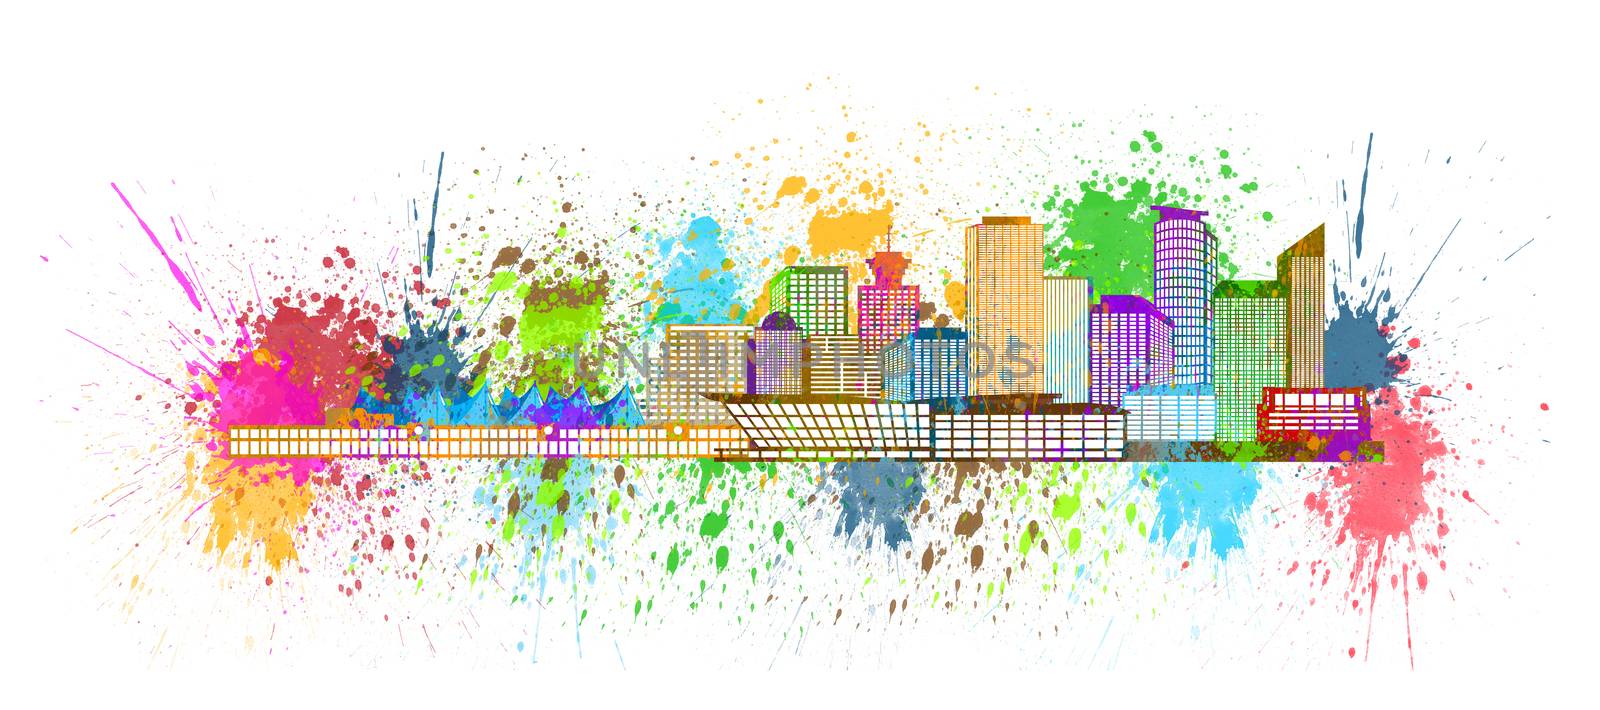 Vancouver BC Skyline Paint Splatter Illustration by jpldesigns